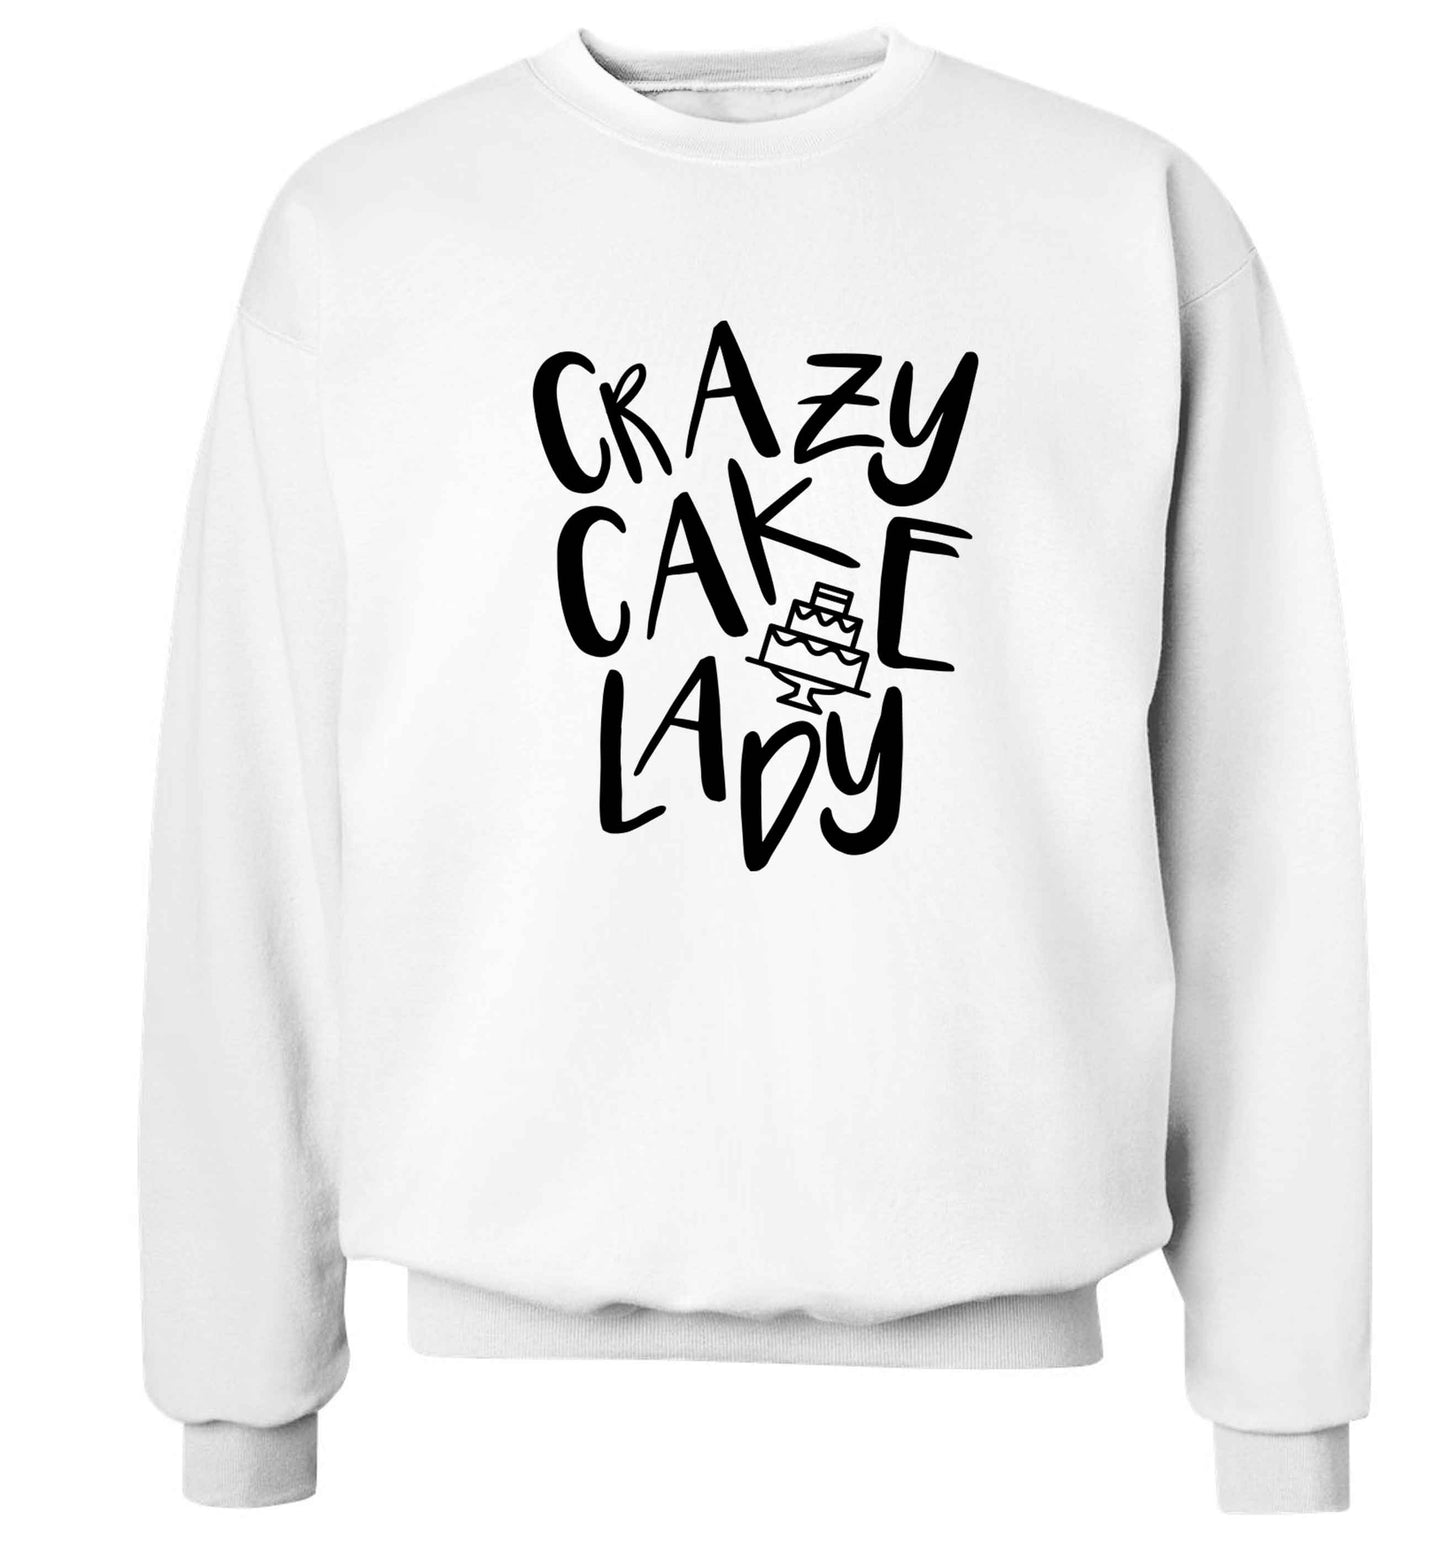 Crazy cake lady Adult's unisex white Sweater 2XL